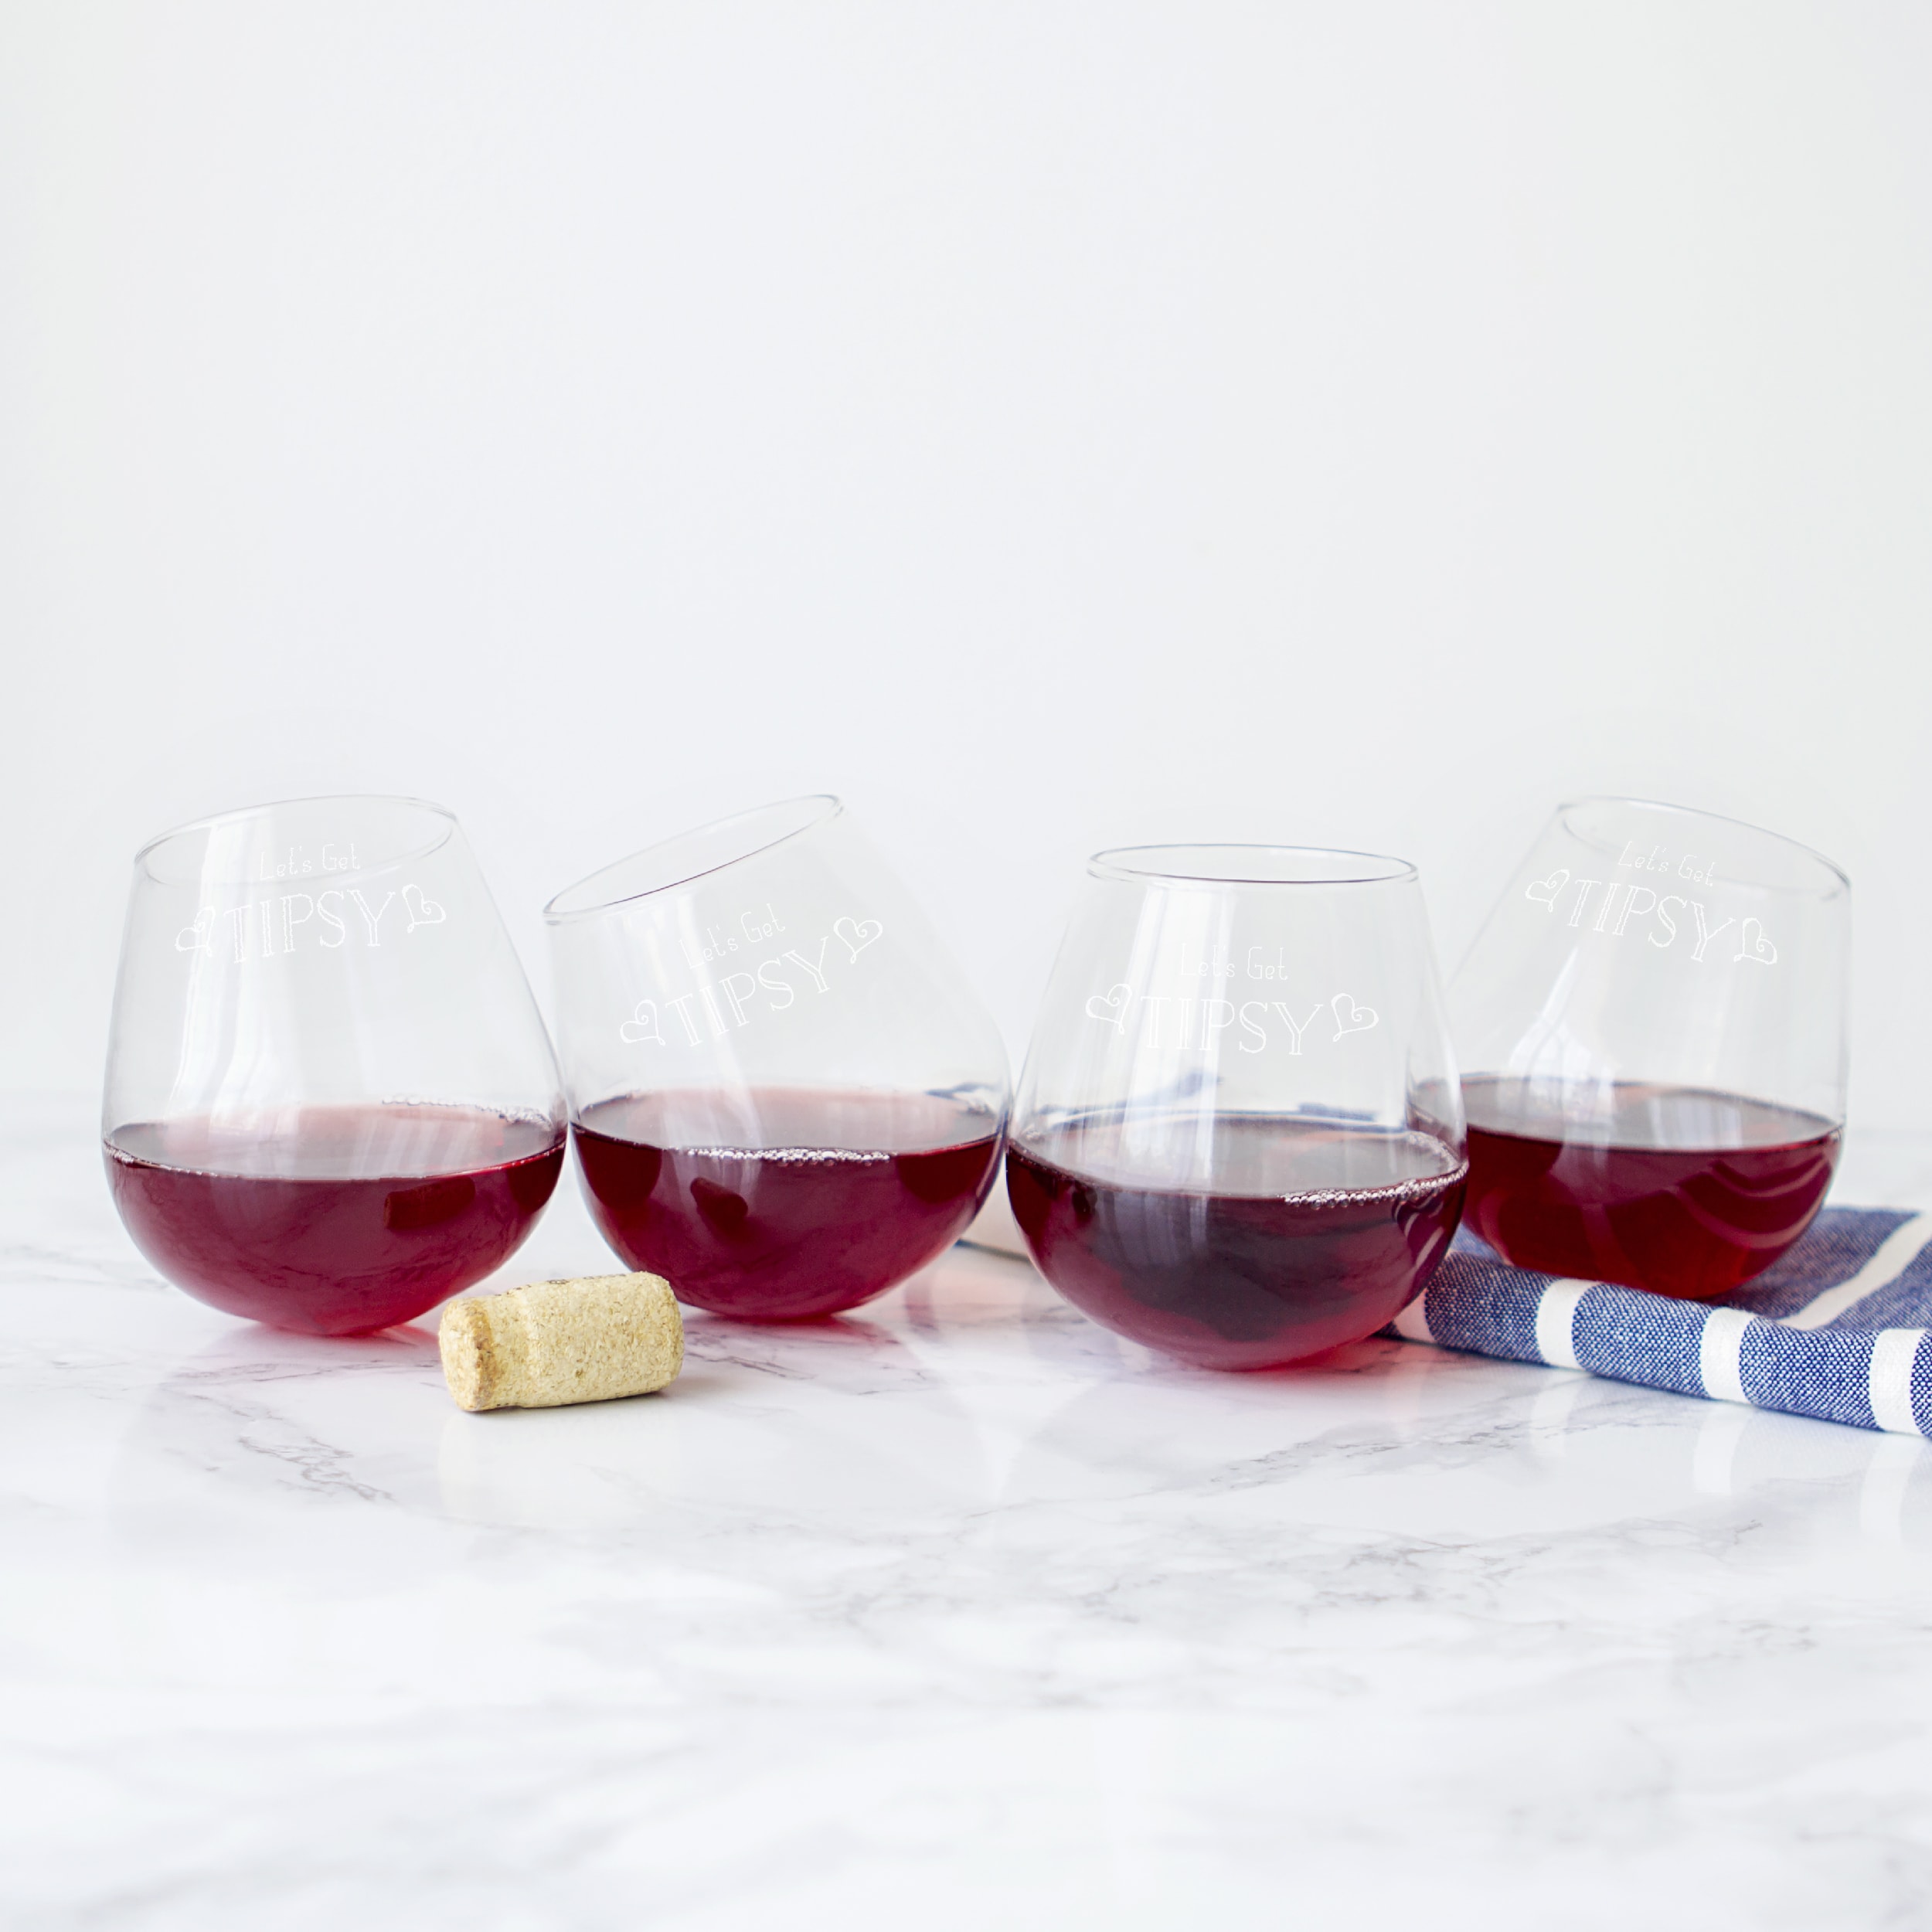 Tipsy Wine Glasses: Set of two delightfully curve wine glasses.